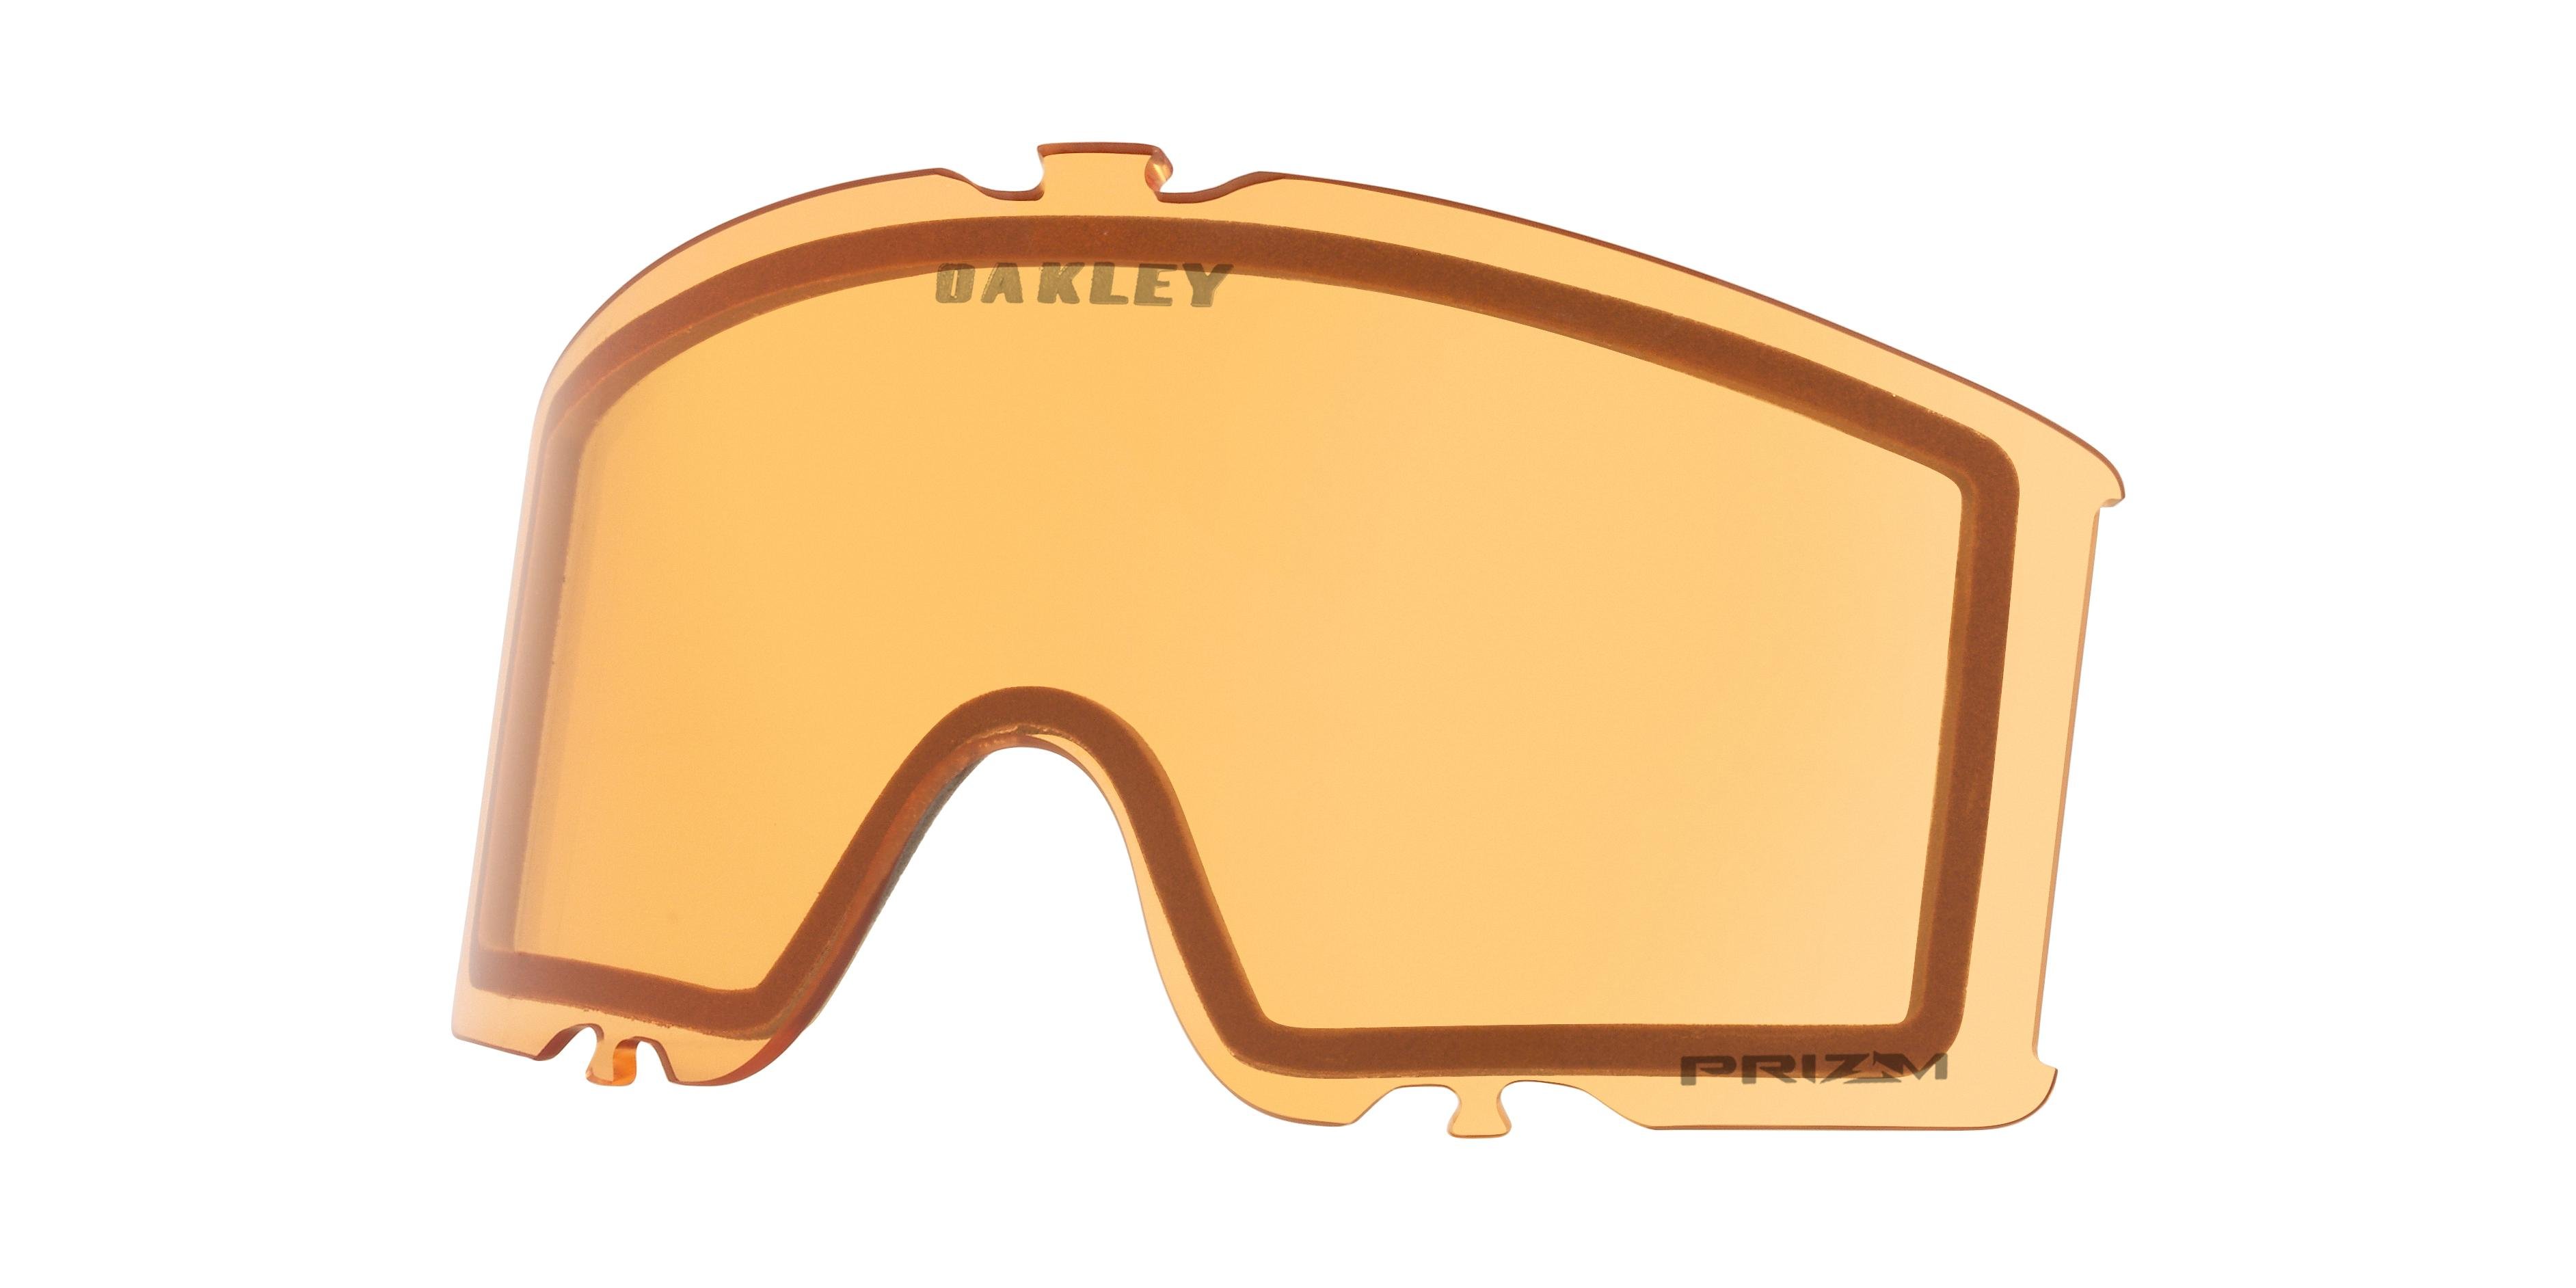 Oakley Men's Target Line S Replacement Lenses by OAKLEY